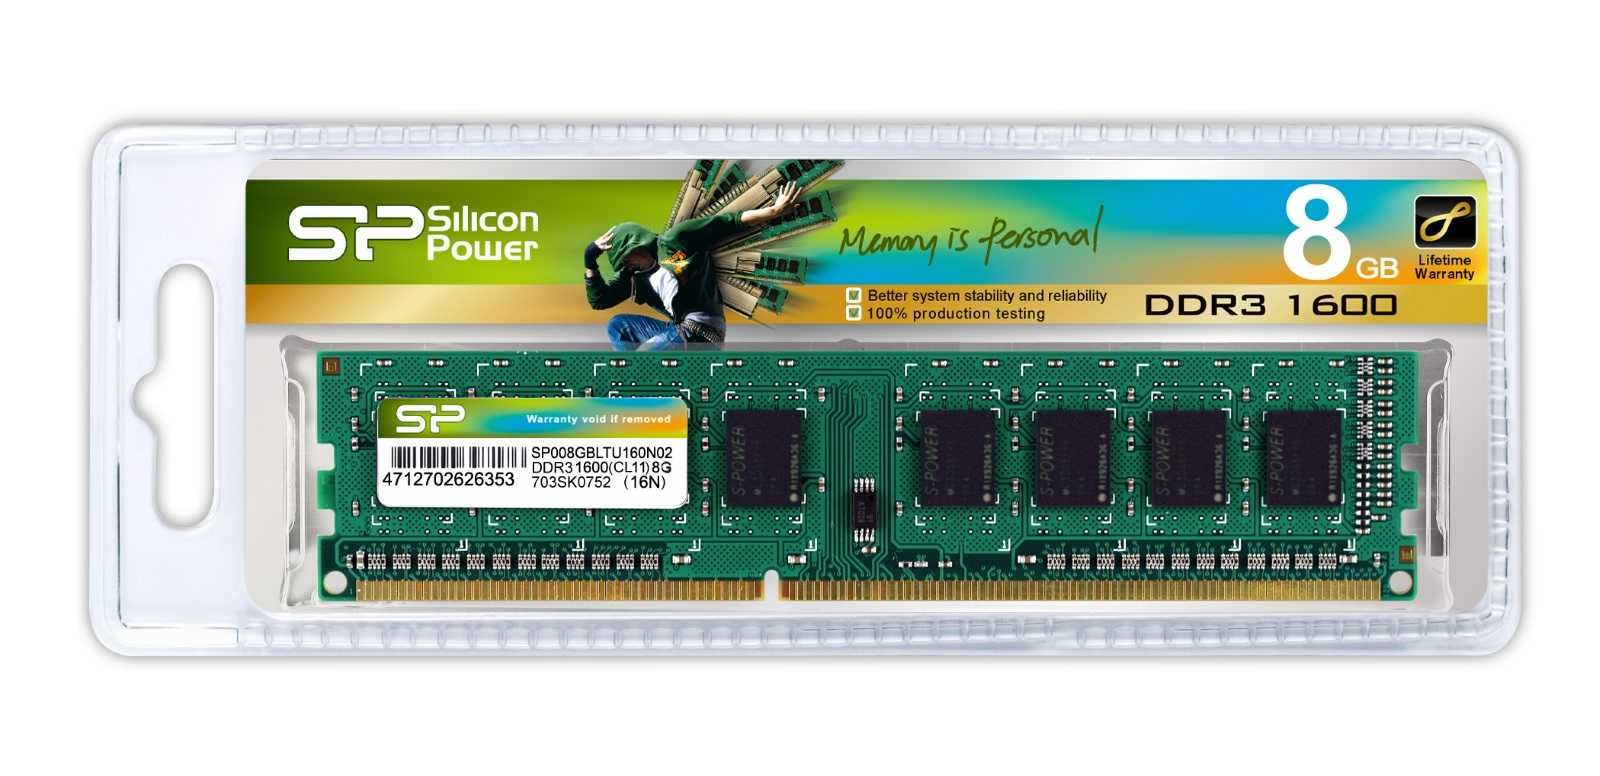 Памет 8GB DDR3 1600MHz Silicon Power PC3-12800 за компютър 1.5-1.35V